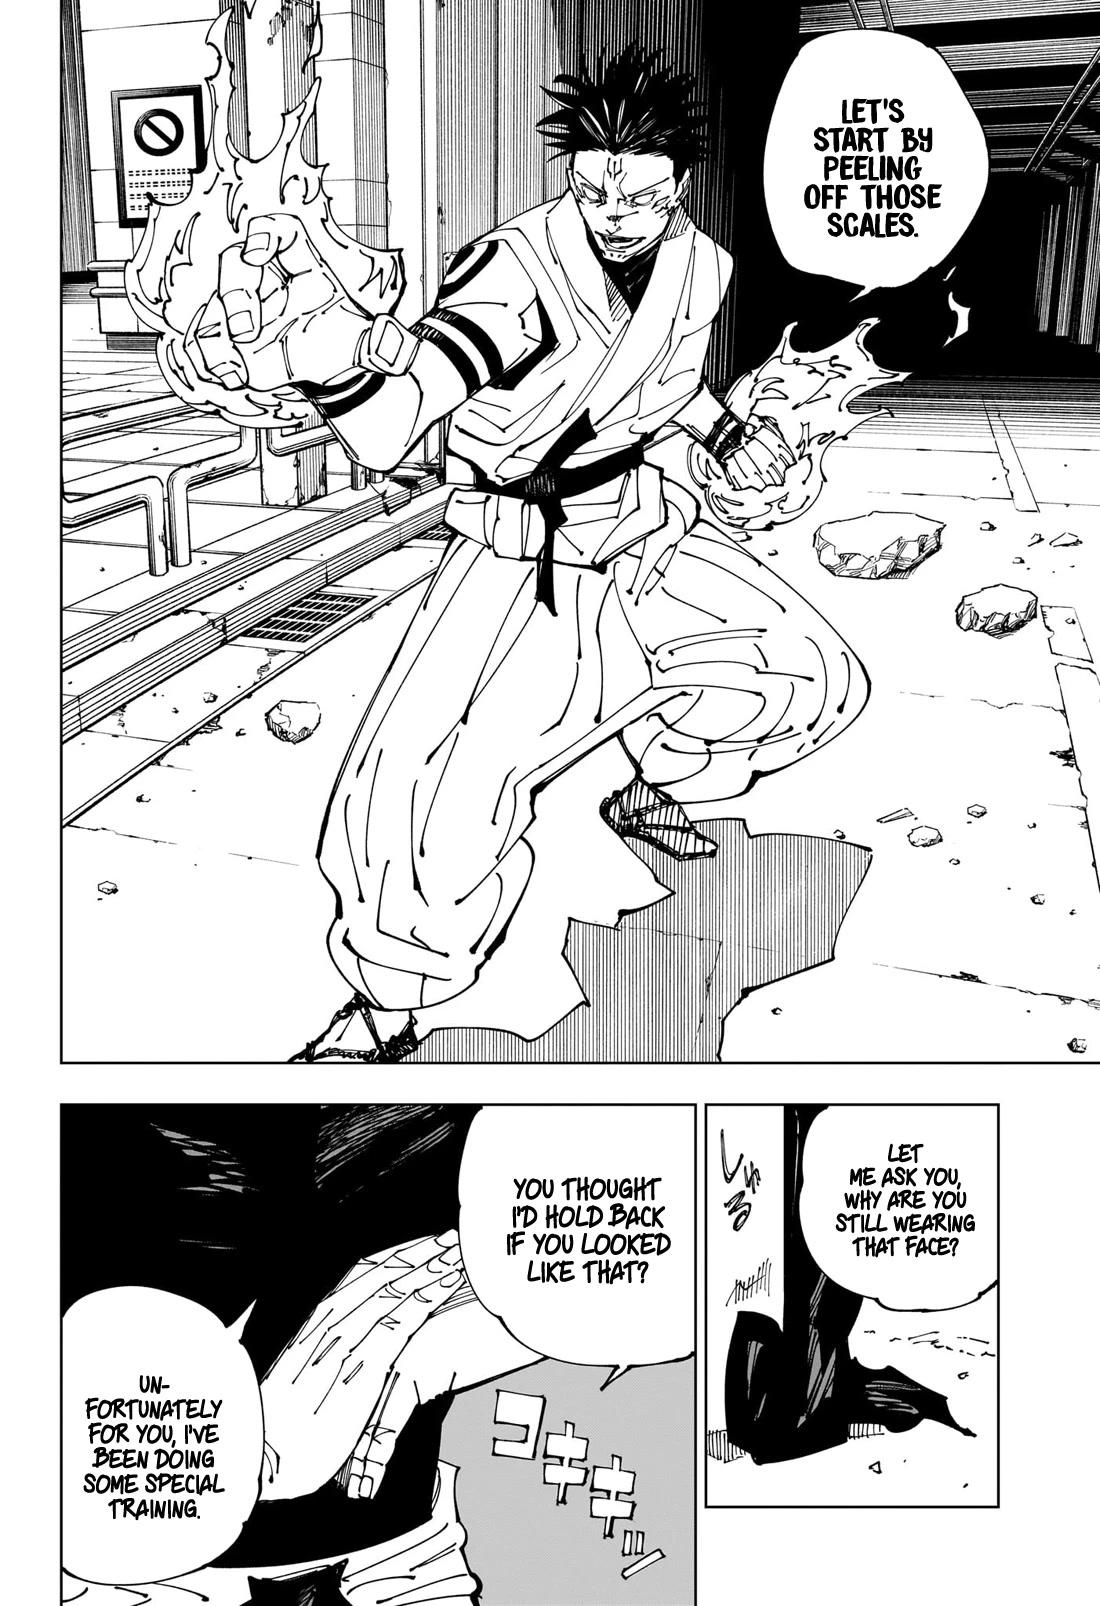 Jujutsu Kaisen Chapter 224: The Decisive Battle In The Uninhabited, Demon-Infested Shinjuku ② page 3 - Mangakakalot